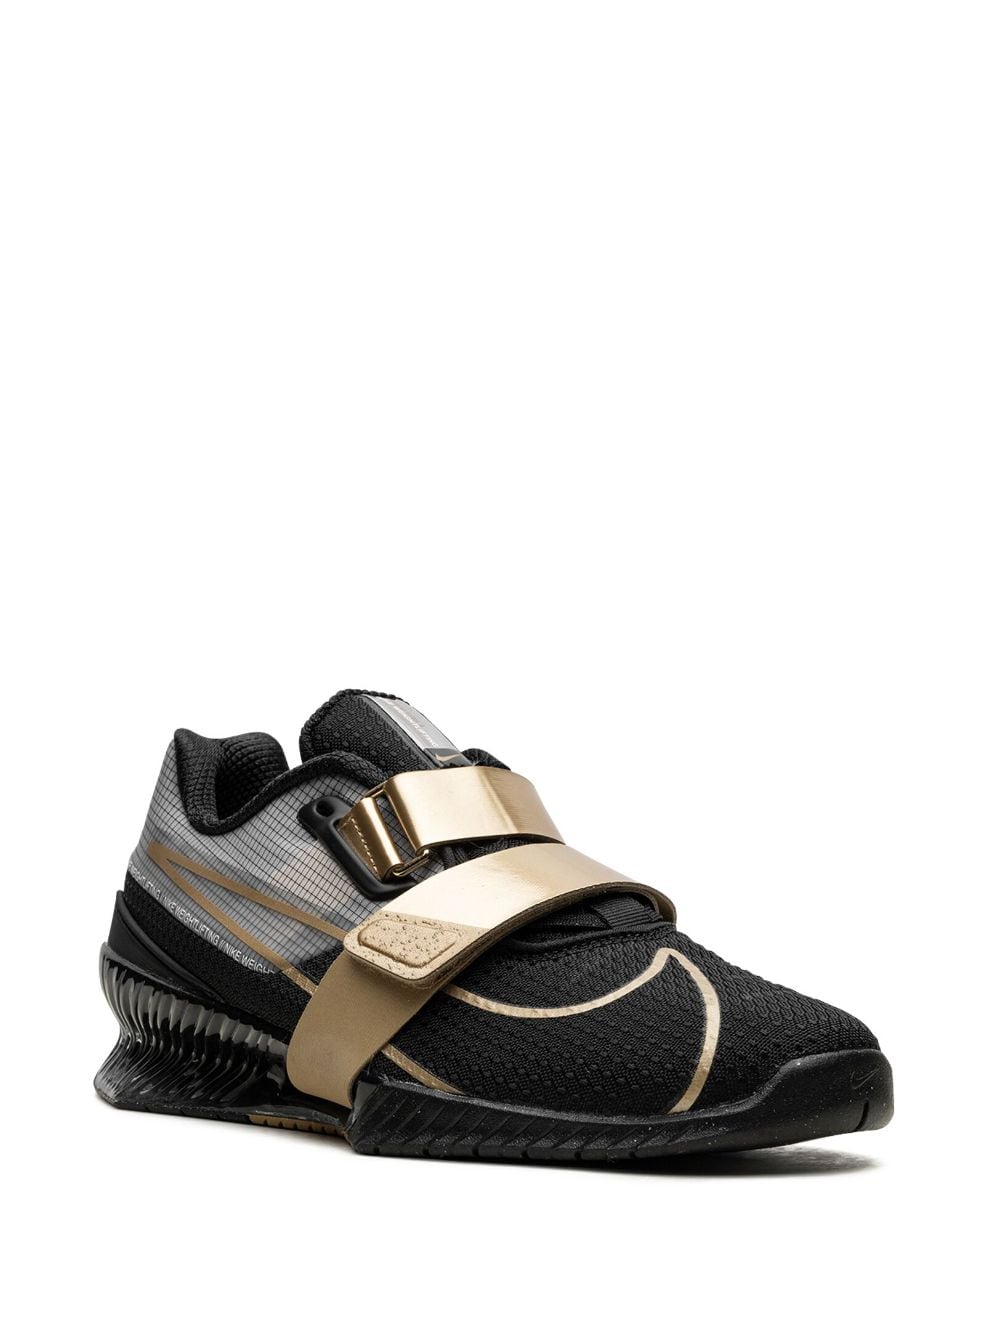 Image 2 of Nike Romaleos 4 "Black/Metallic Gold" weightlifting shoes